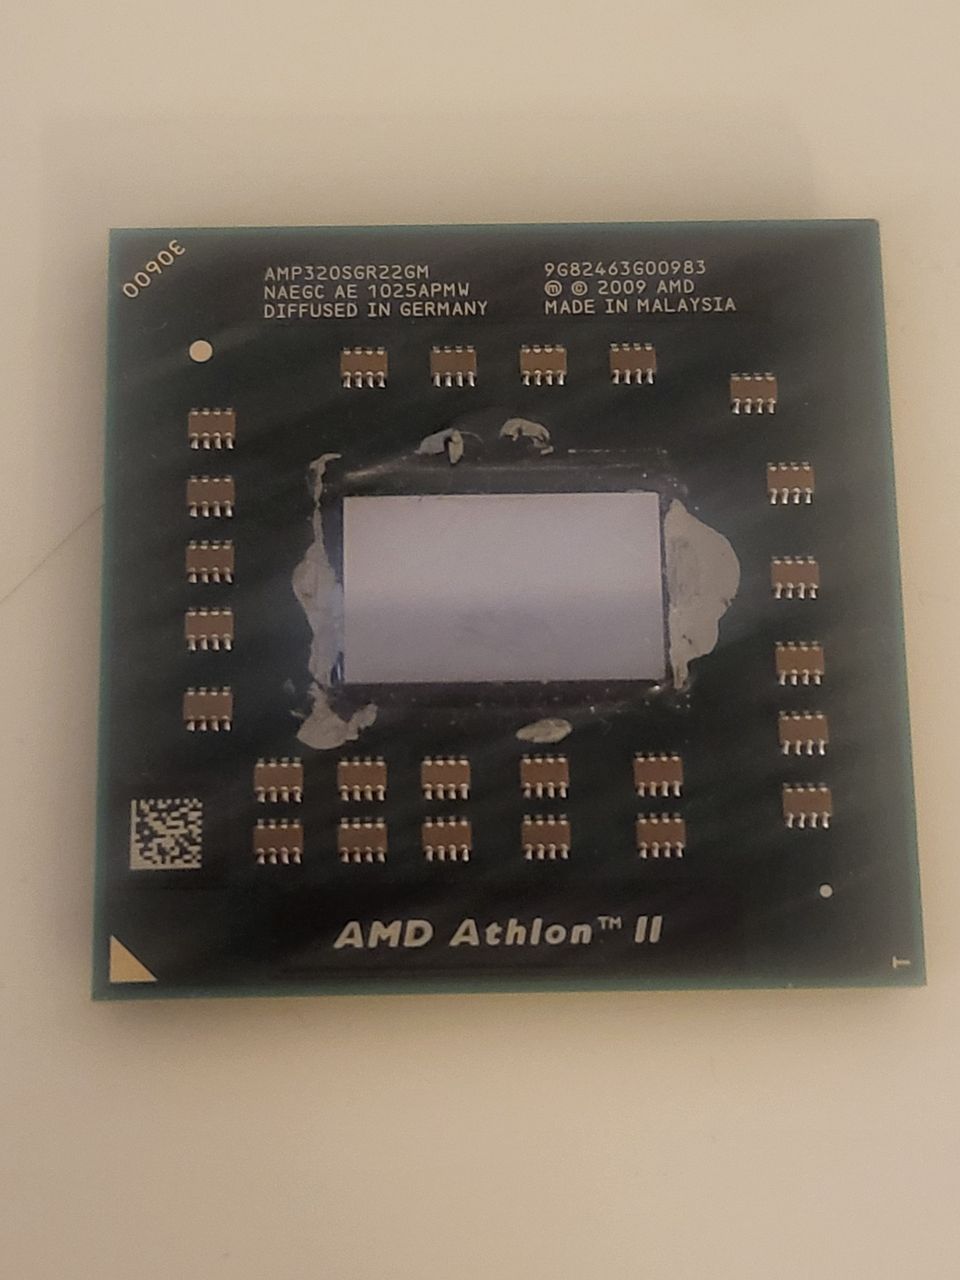 AMD Athlon II Dual-Core P320 kannettavan prosessori